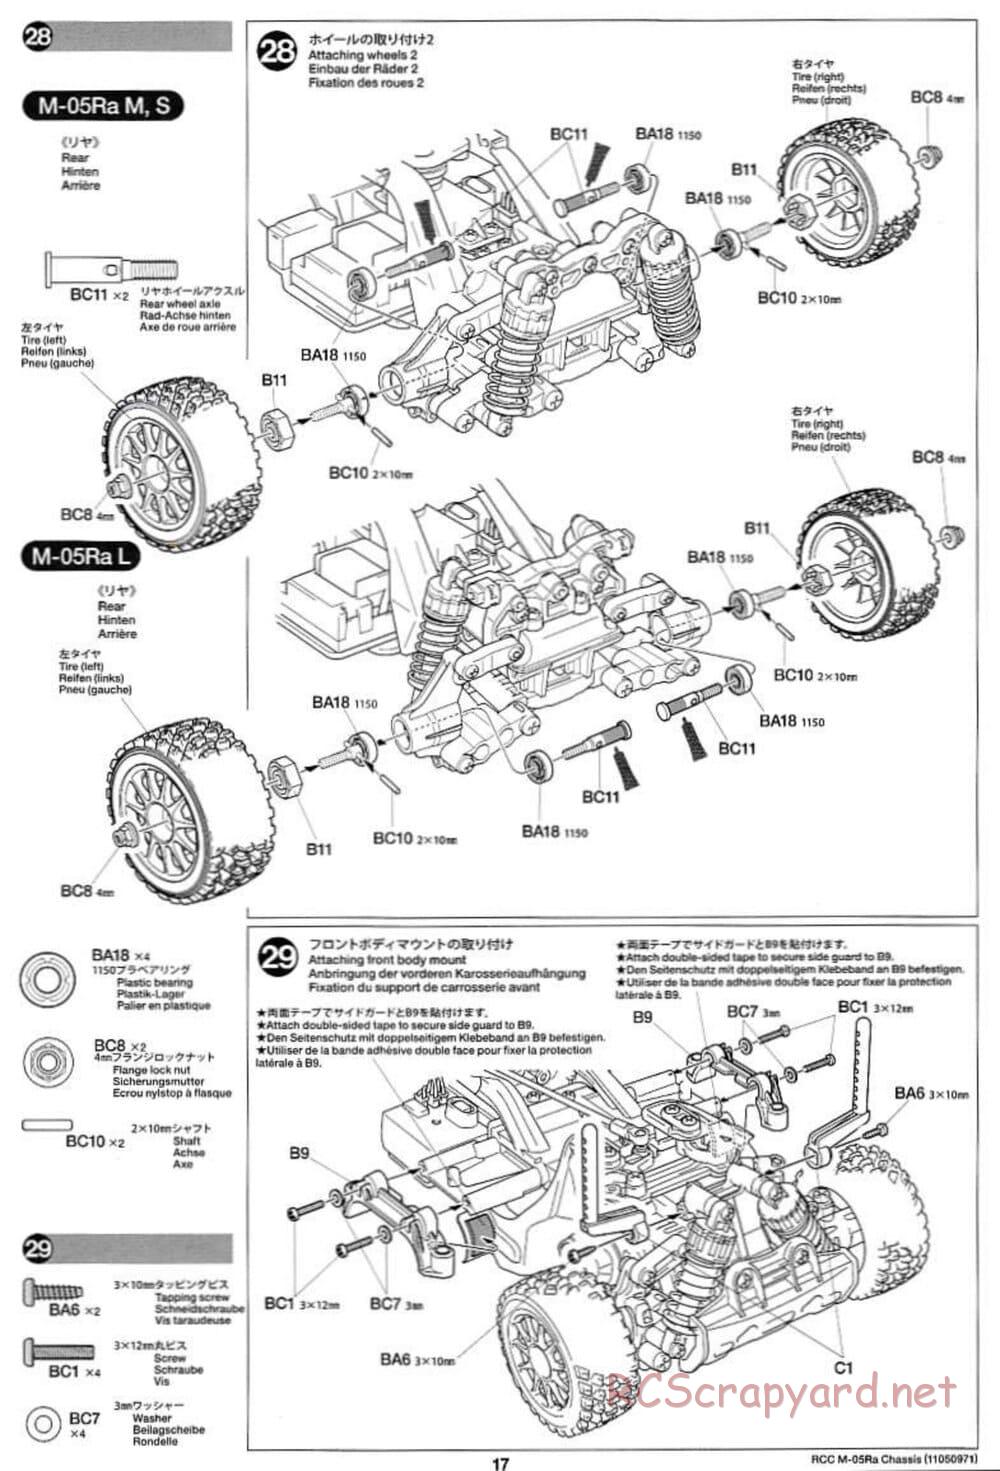 Tamiya - M-05Ra Chassis - Manual - Page 17